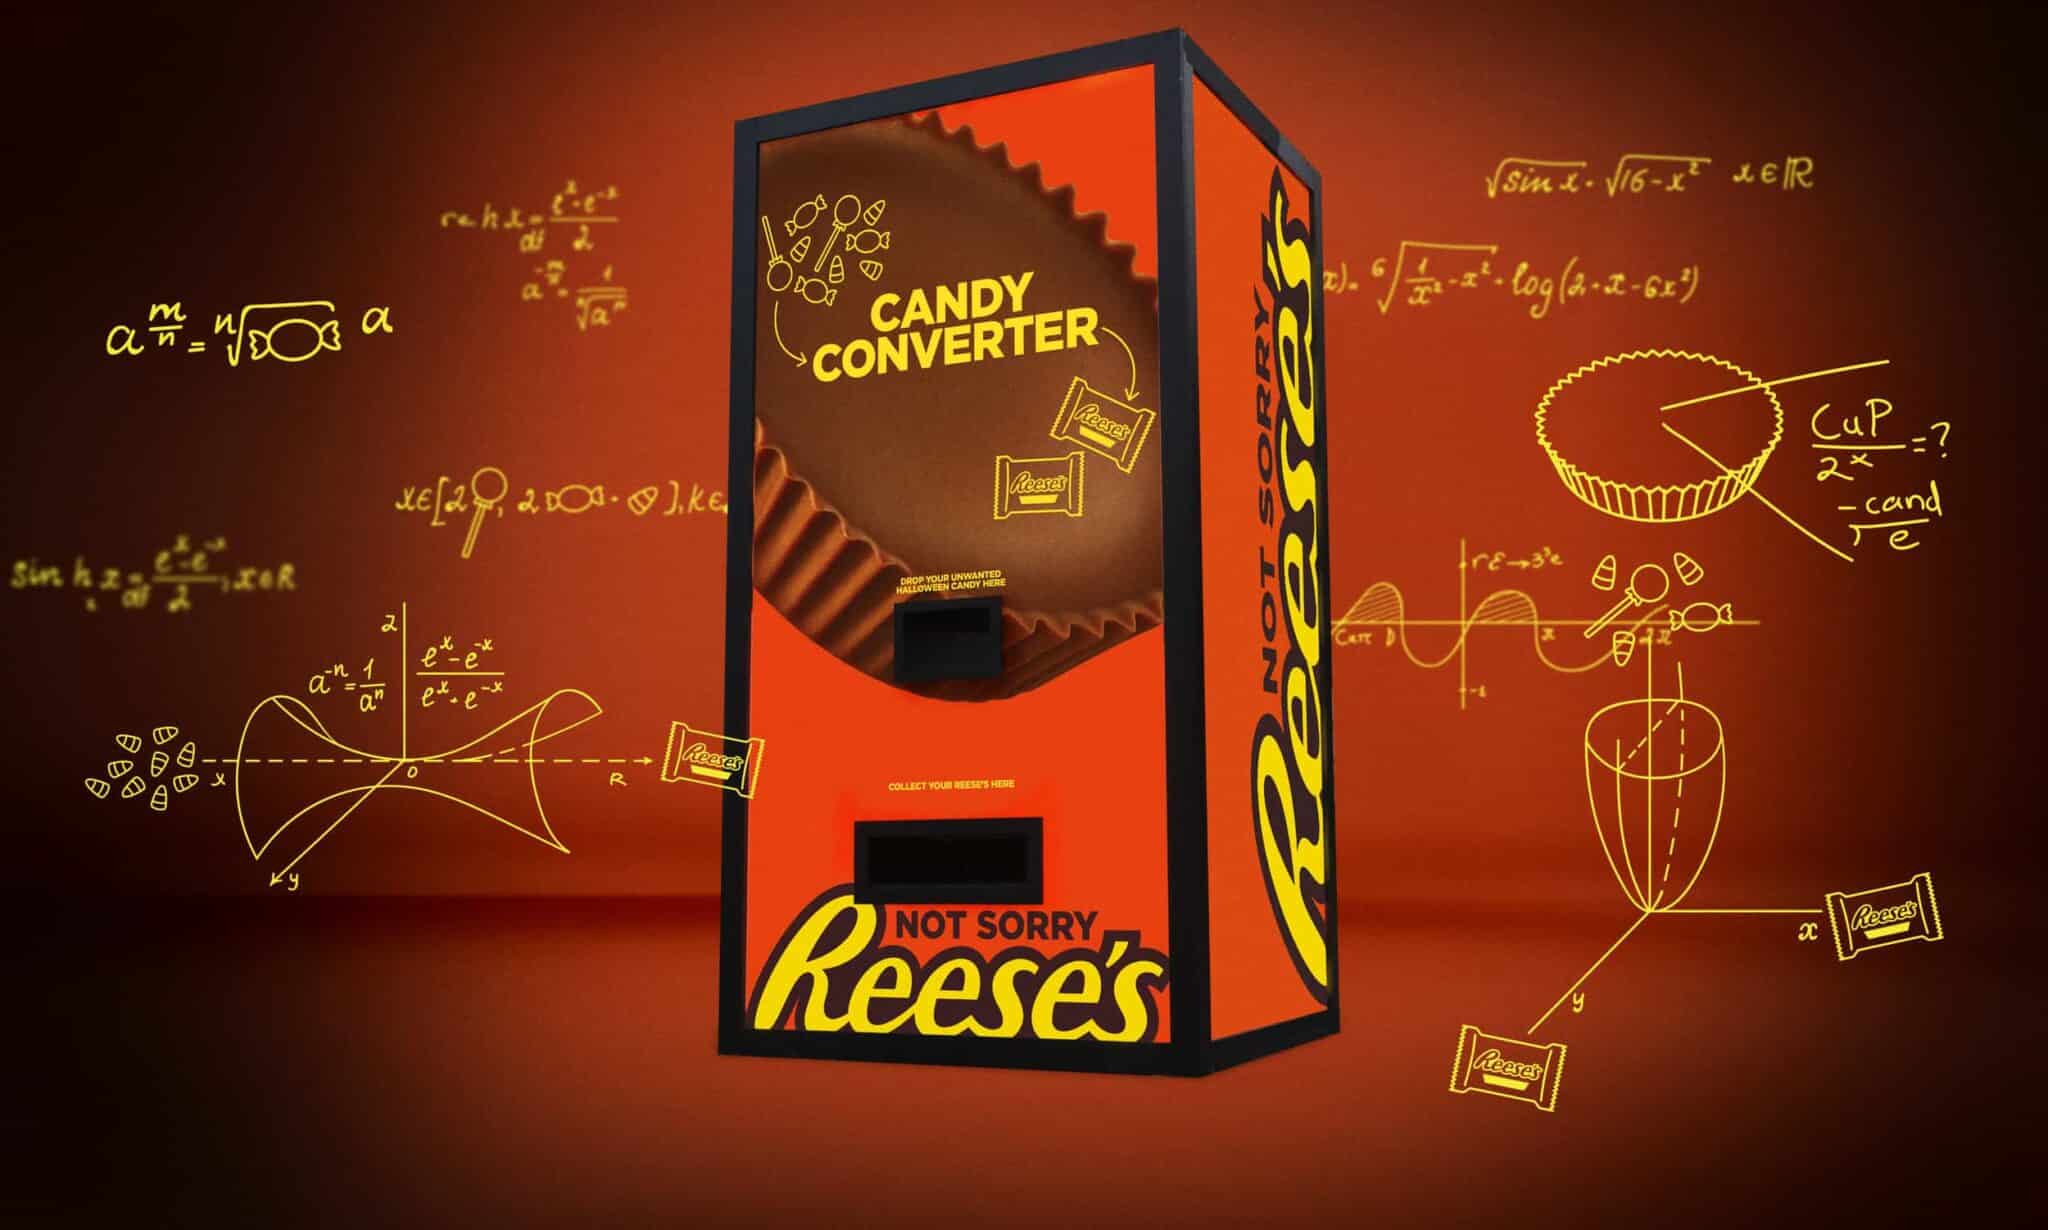 Reese’s Candy Converter ตู้แลกขนมฟรีจนได้ฟรี PR จาก CNN และทั่วประเทศ